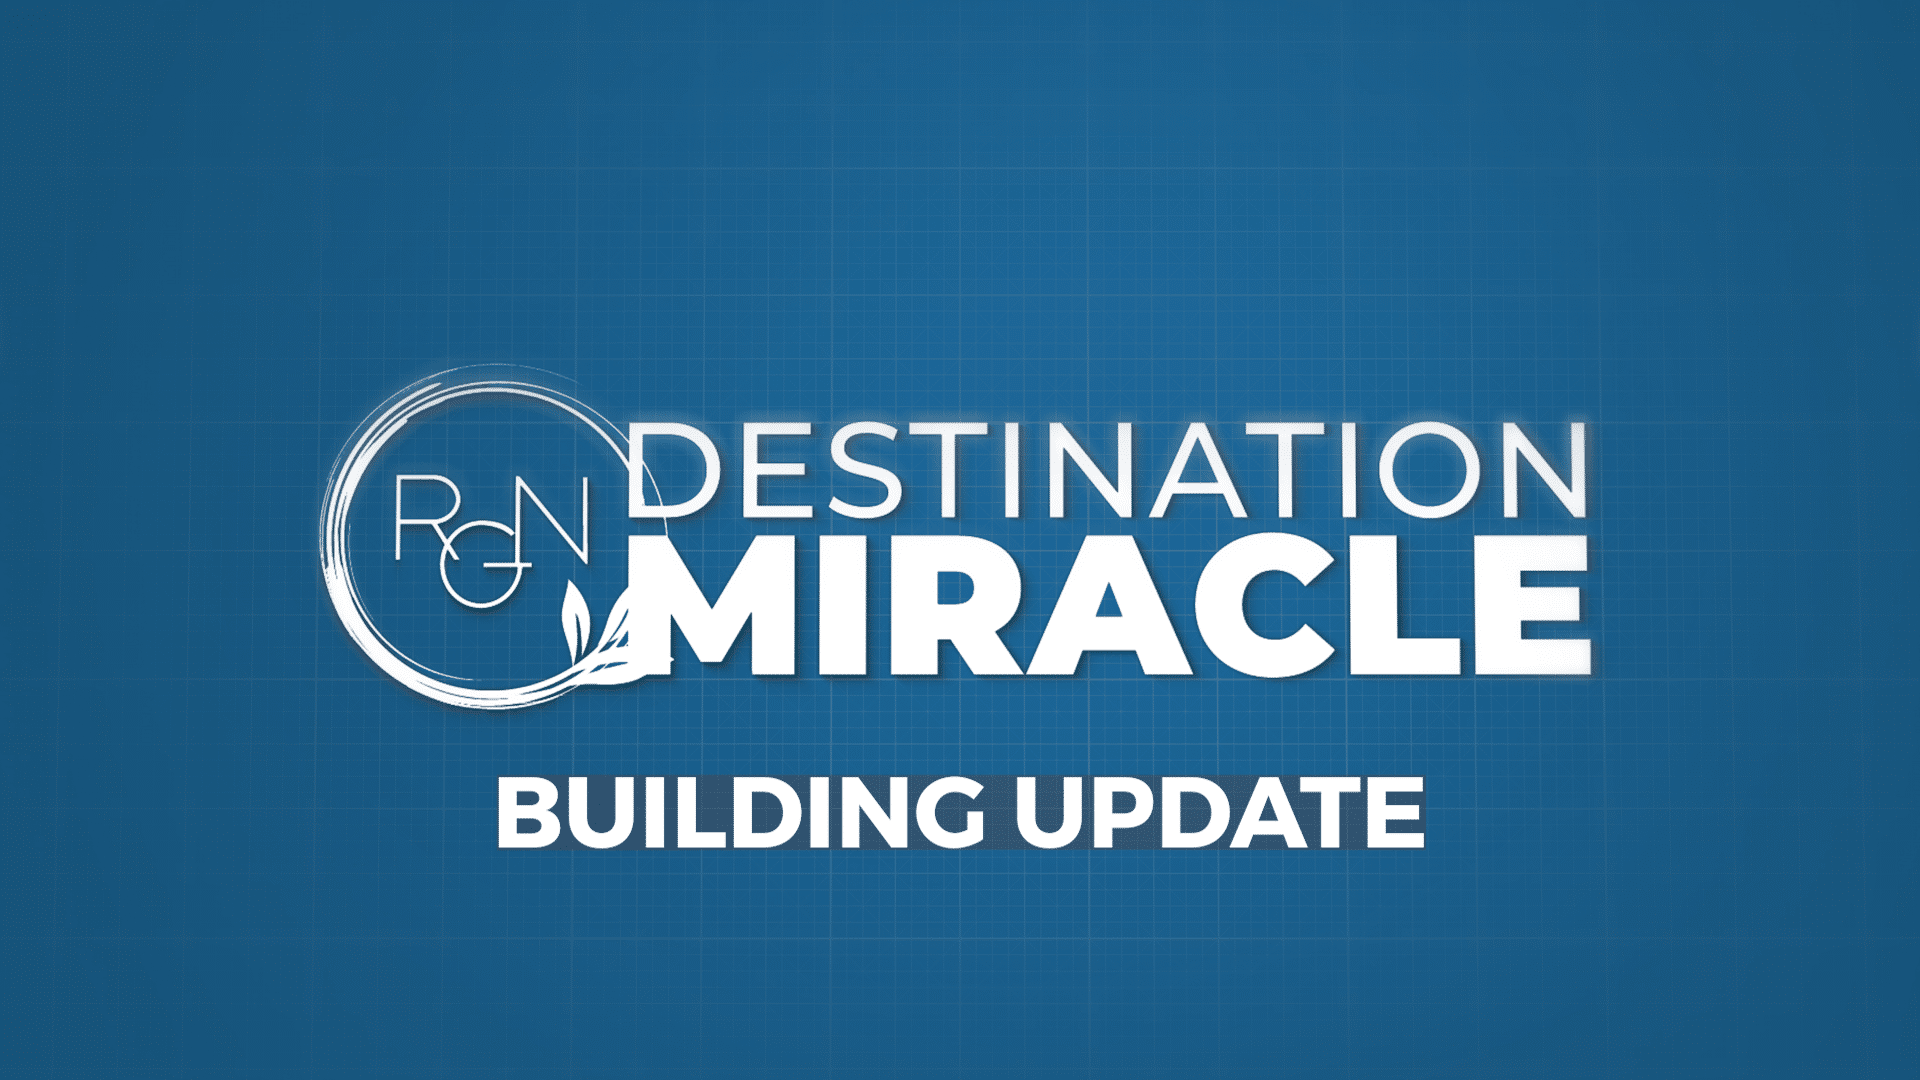 Destination Miracle building updates